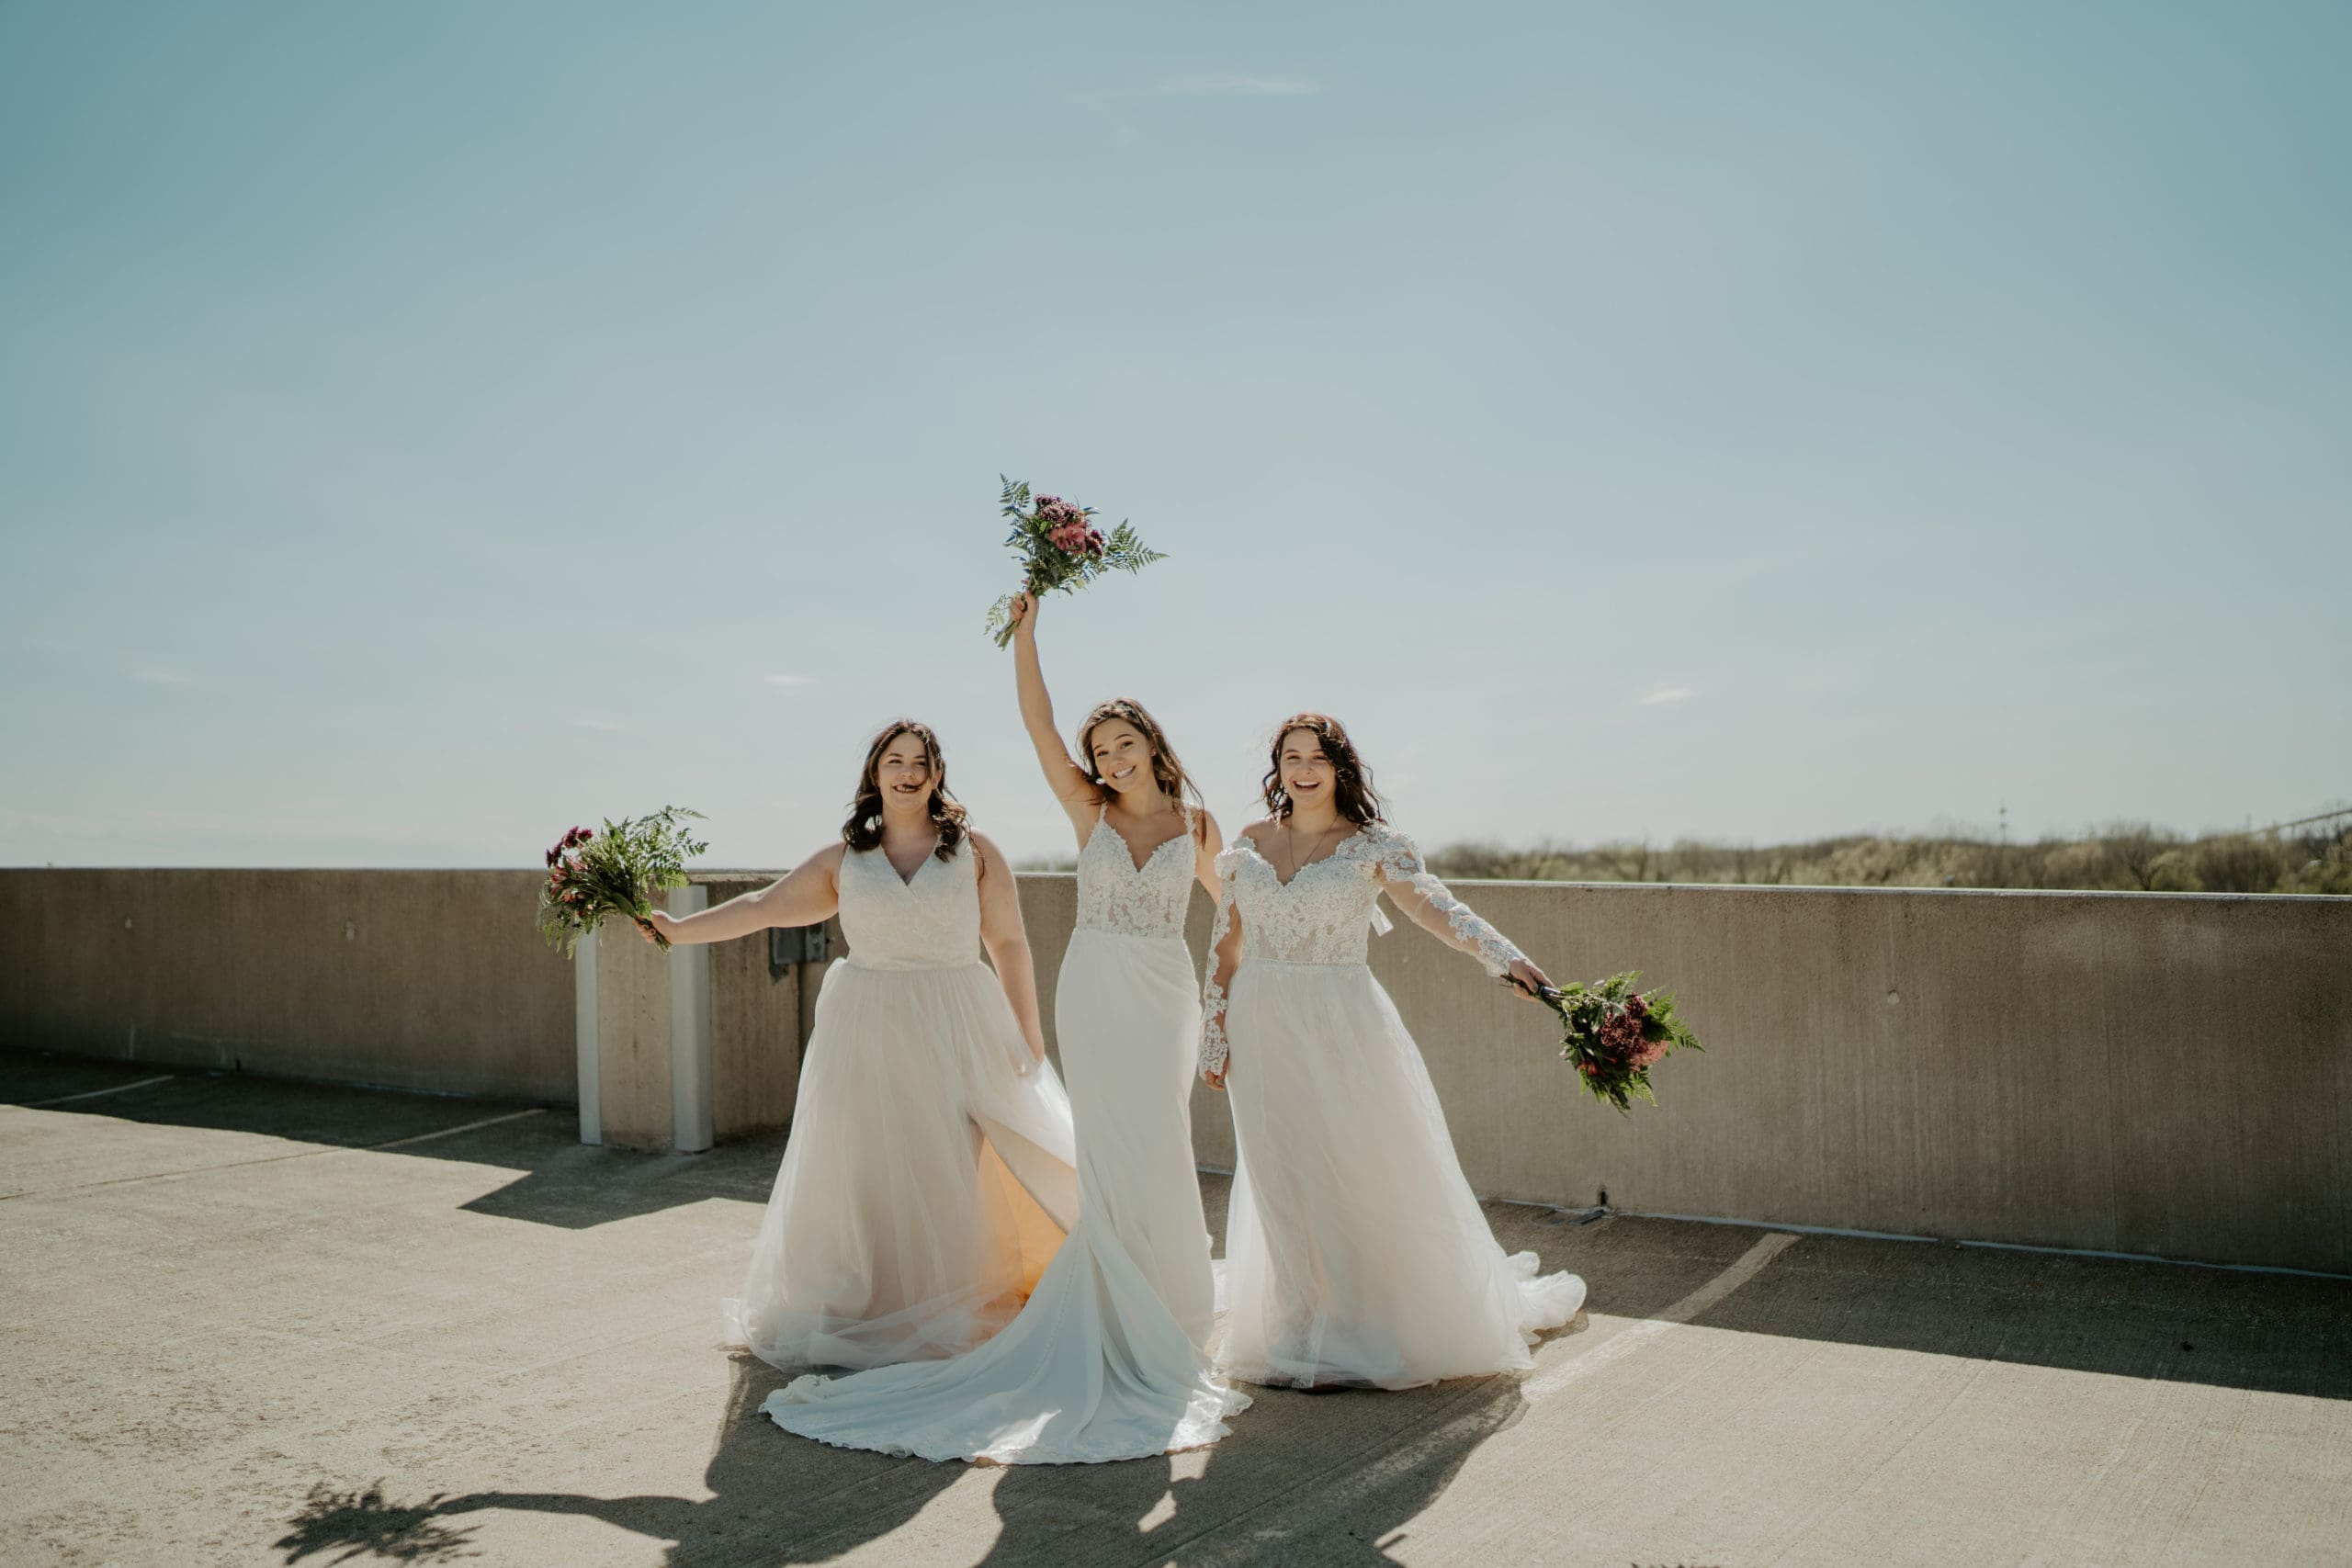 https://gretchensbridalgallery.com/wp-content/uploads/2021/06/wedding-dress-questions-gretchens-bridal-gallery-scaled.jpg